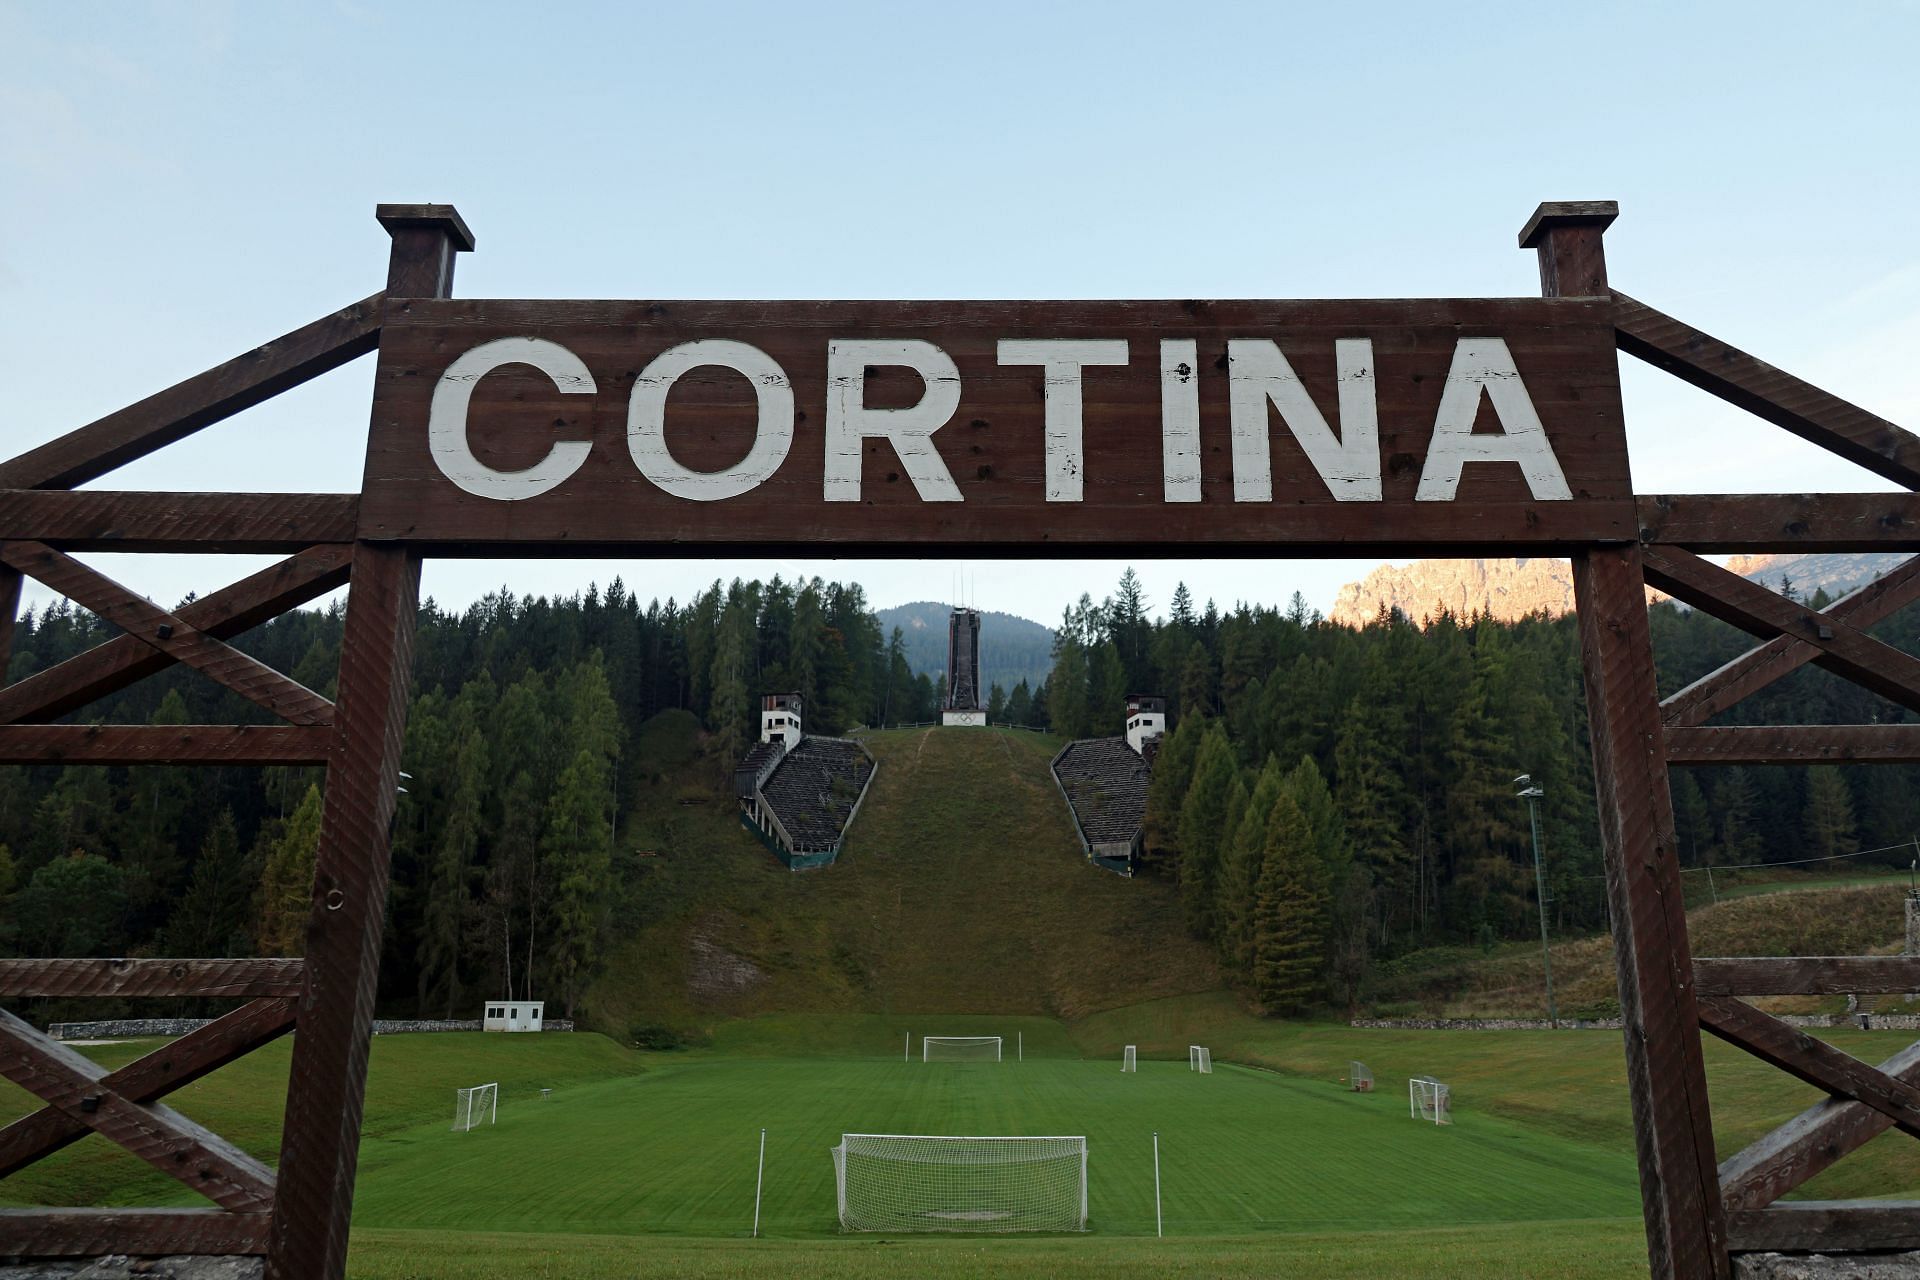 Milano Cortina 2026 Olympic Winter Games - Previews